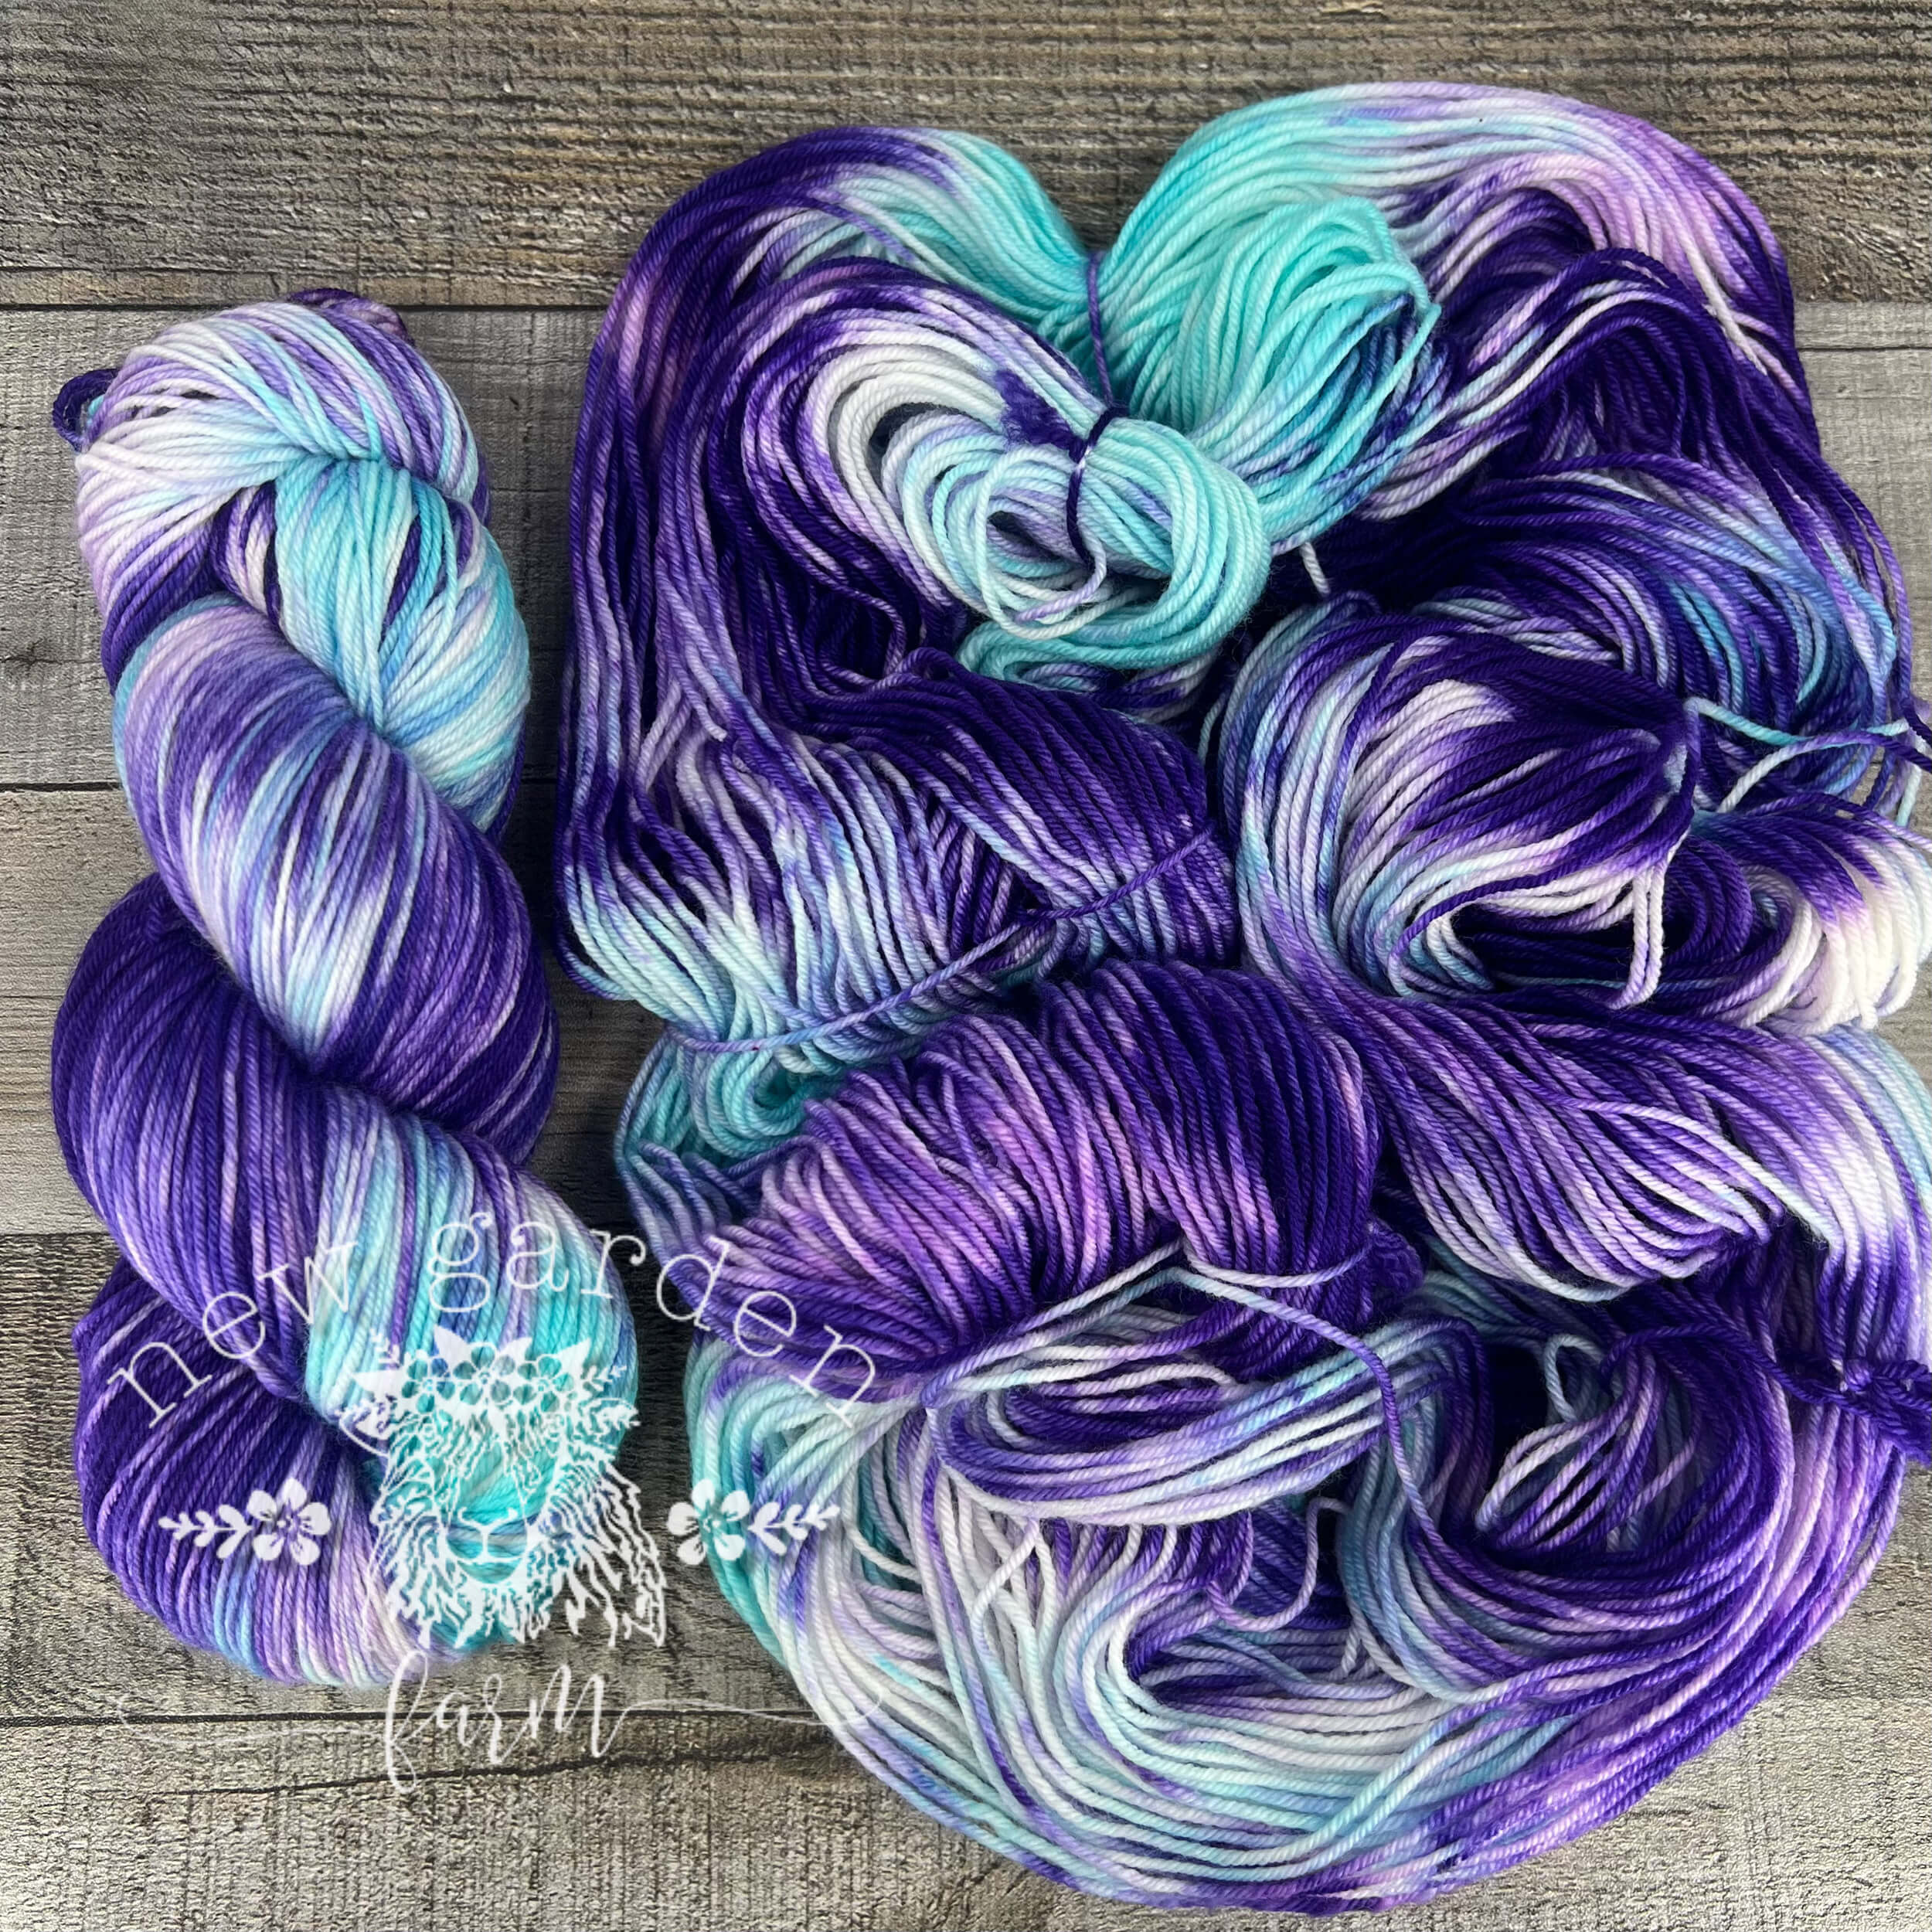 Iris hand dyed yarn, pale aqua and purple laying on a barn wood background